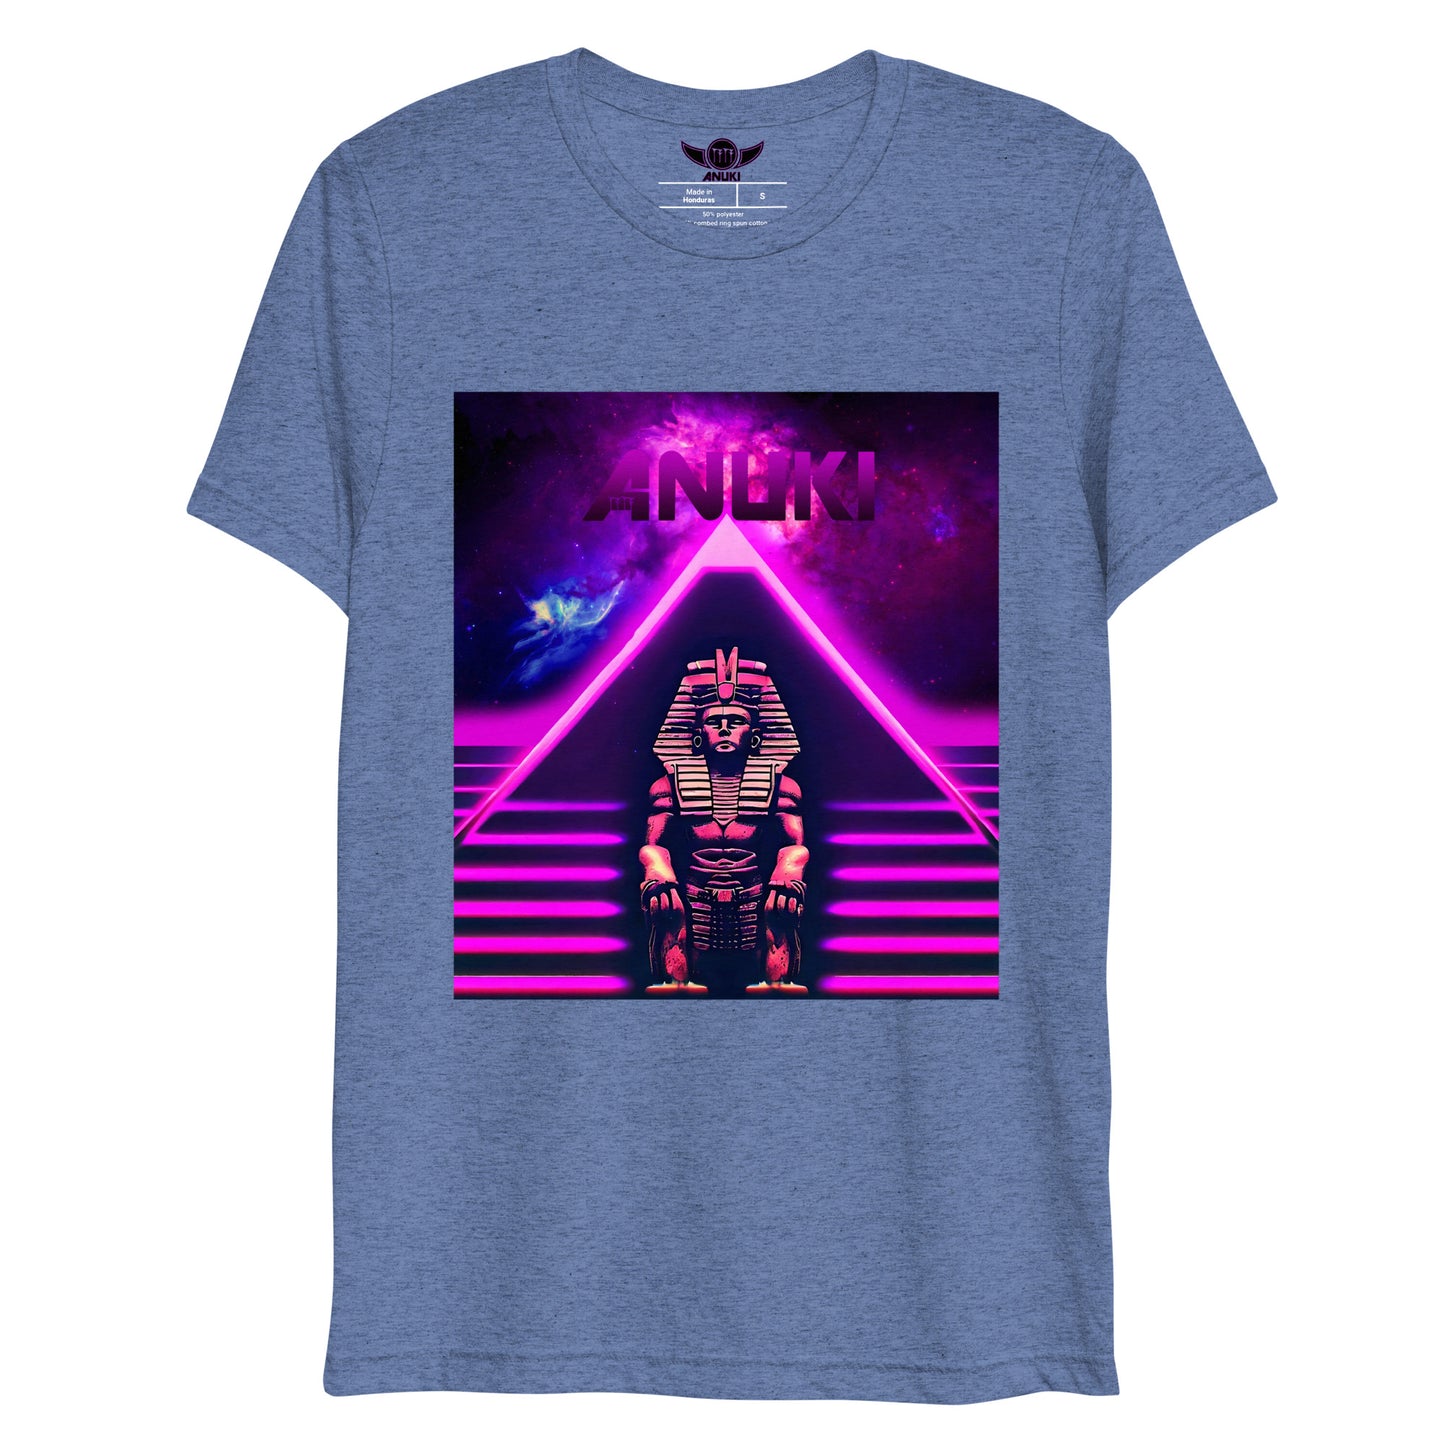 The Pyramid Galaxy T-Shirt 002